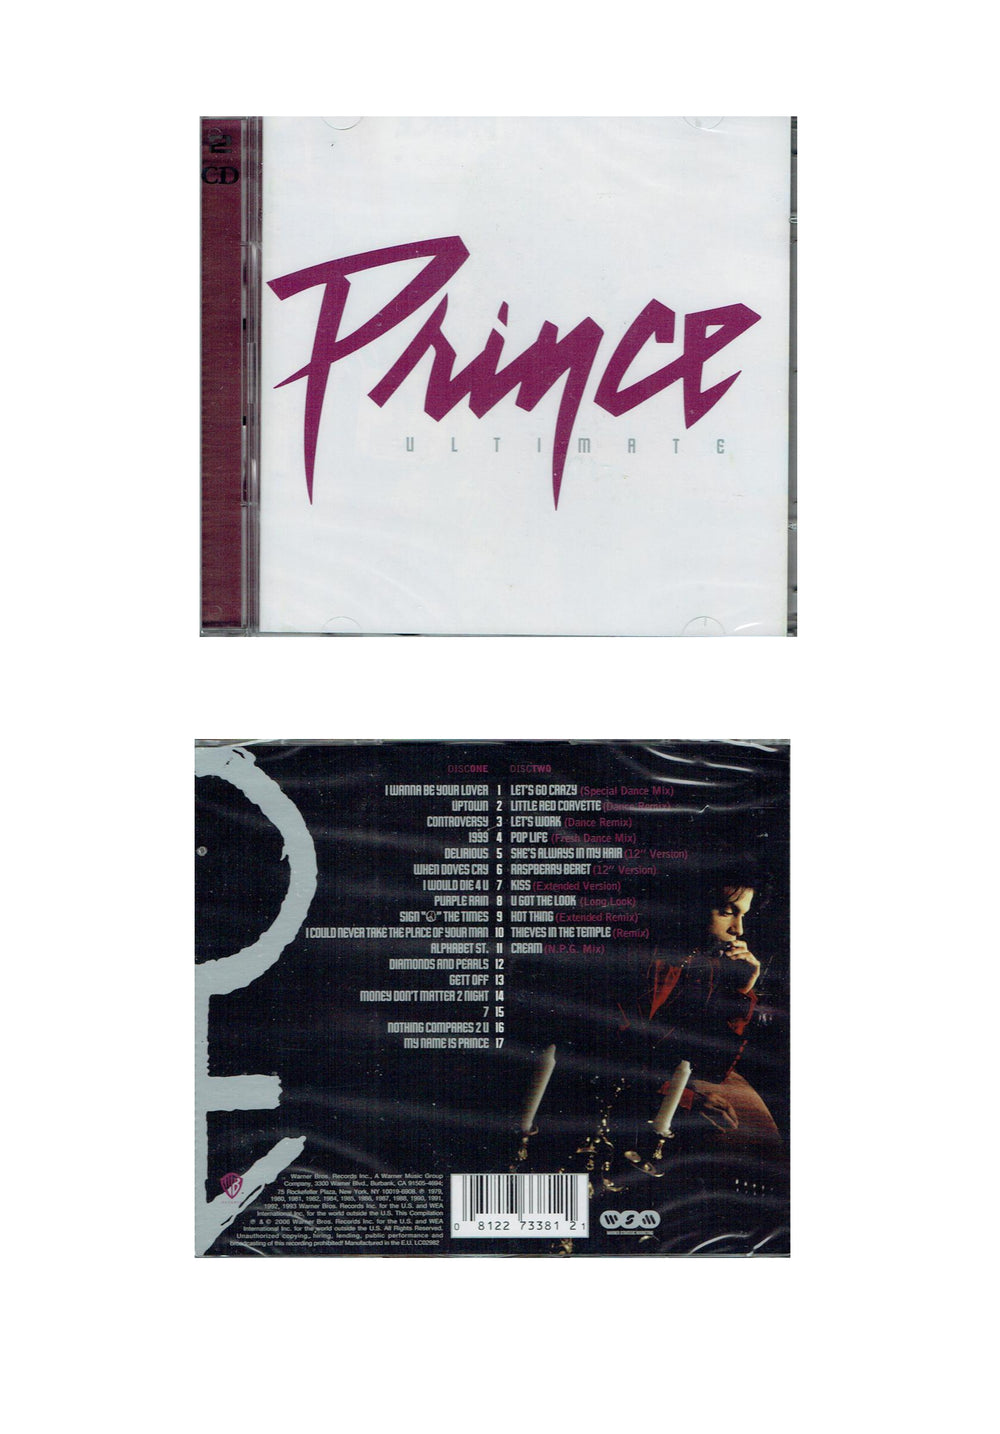 Prince – Ultimate 2 CD Album (17 Hits & 11 Remixes) NEW 2006